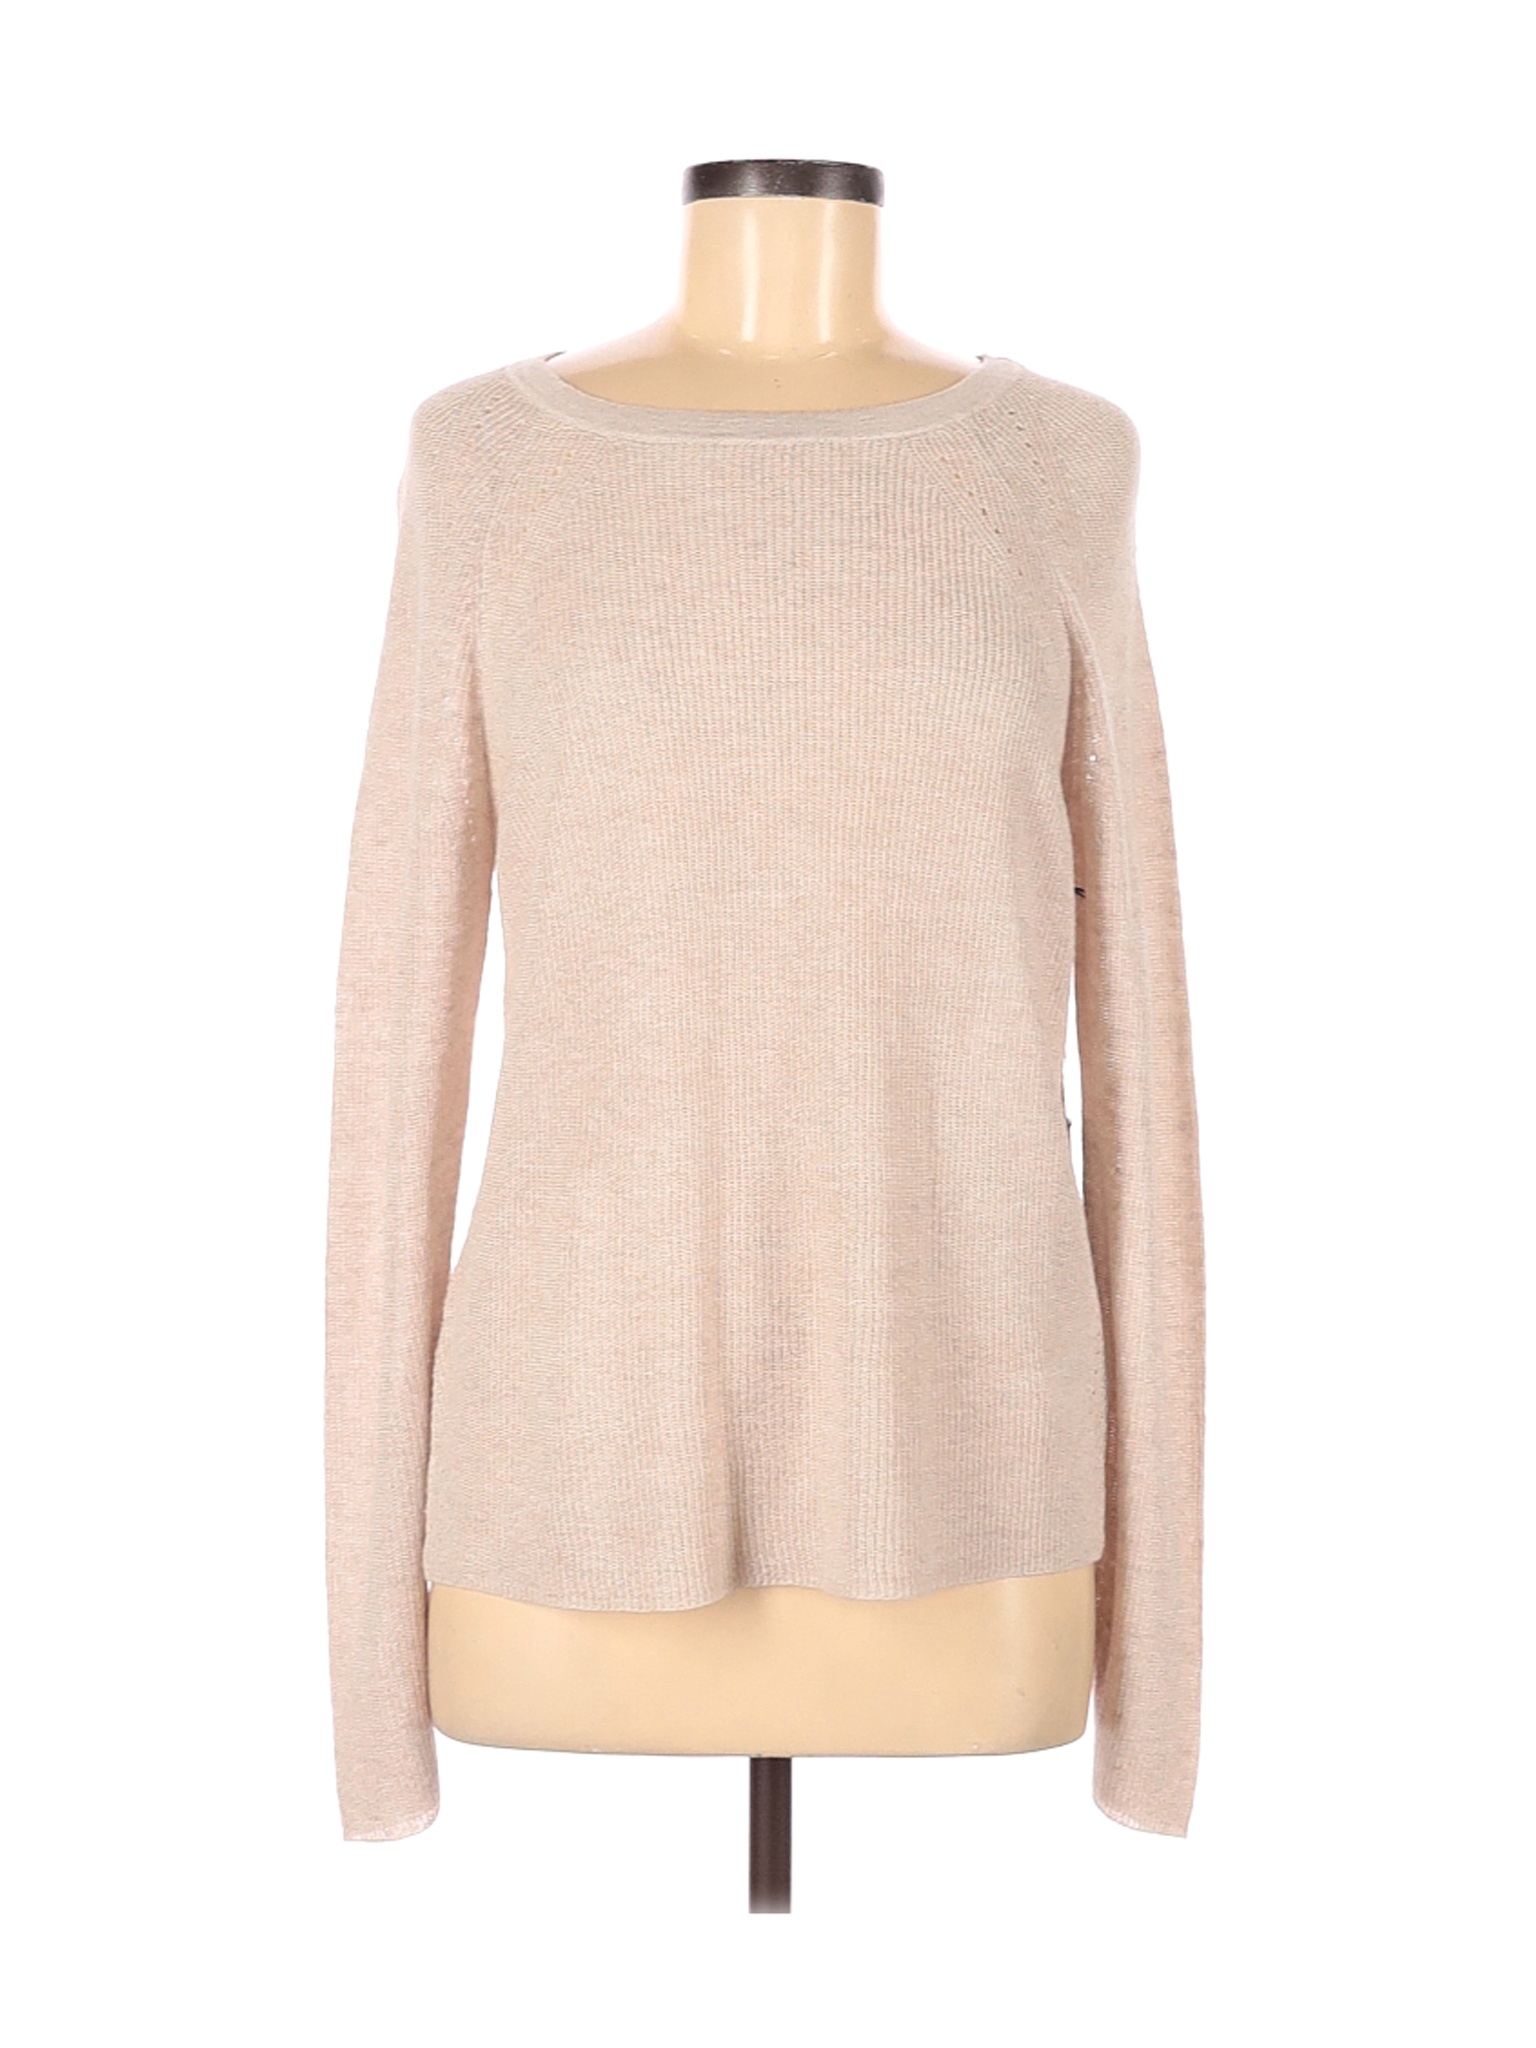 Tahari Women Brown Pullover Sweater M | eBay